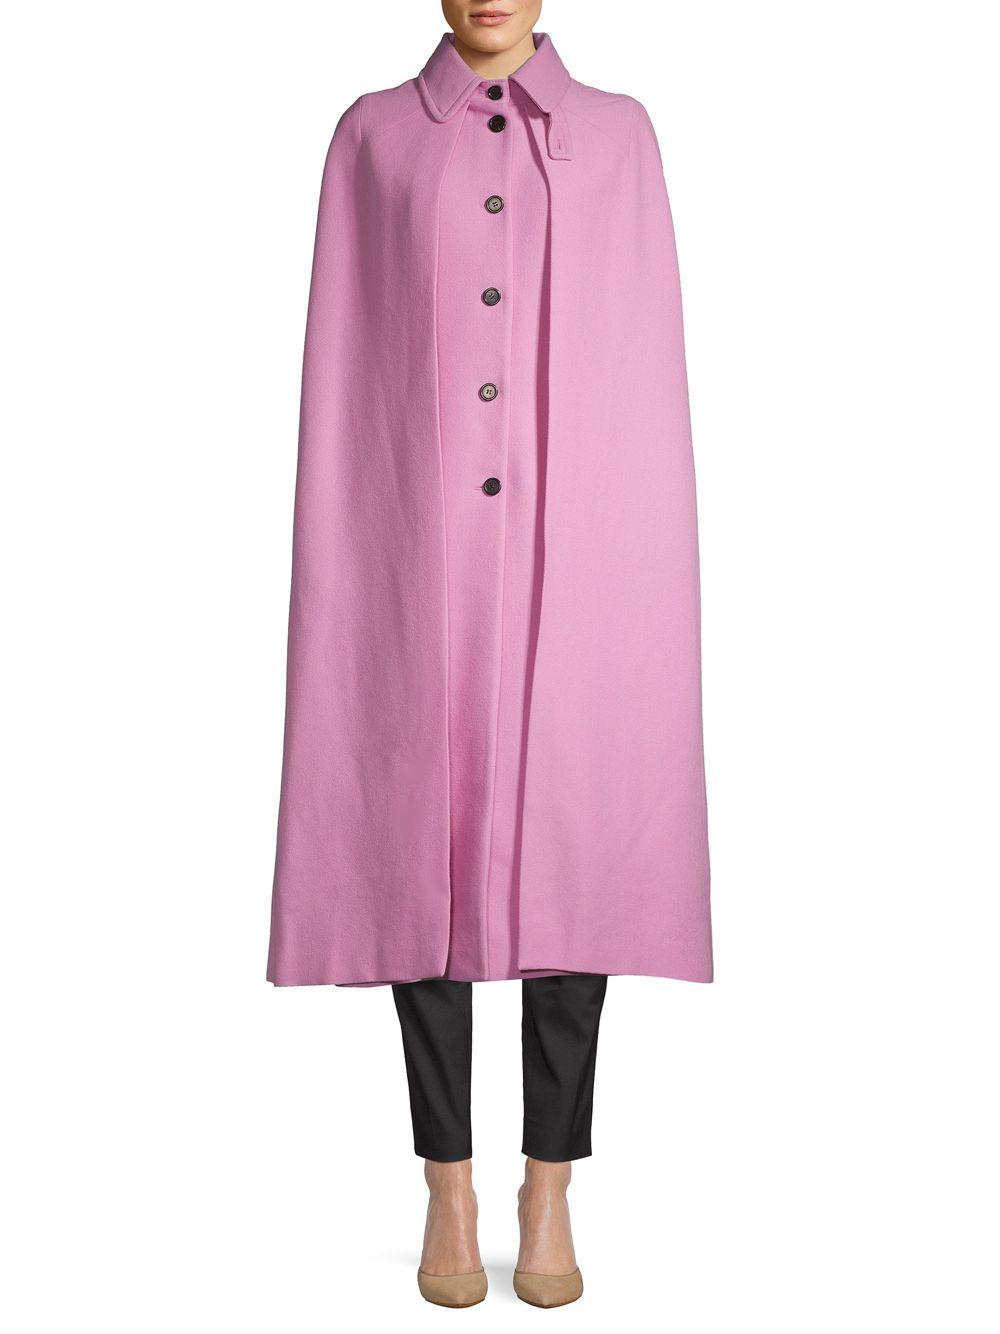 Valentino Virgin Wool Cape Coat in Pink - Lyst